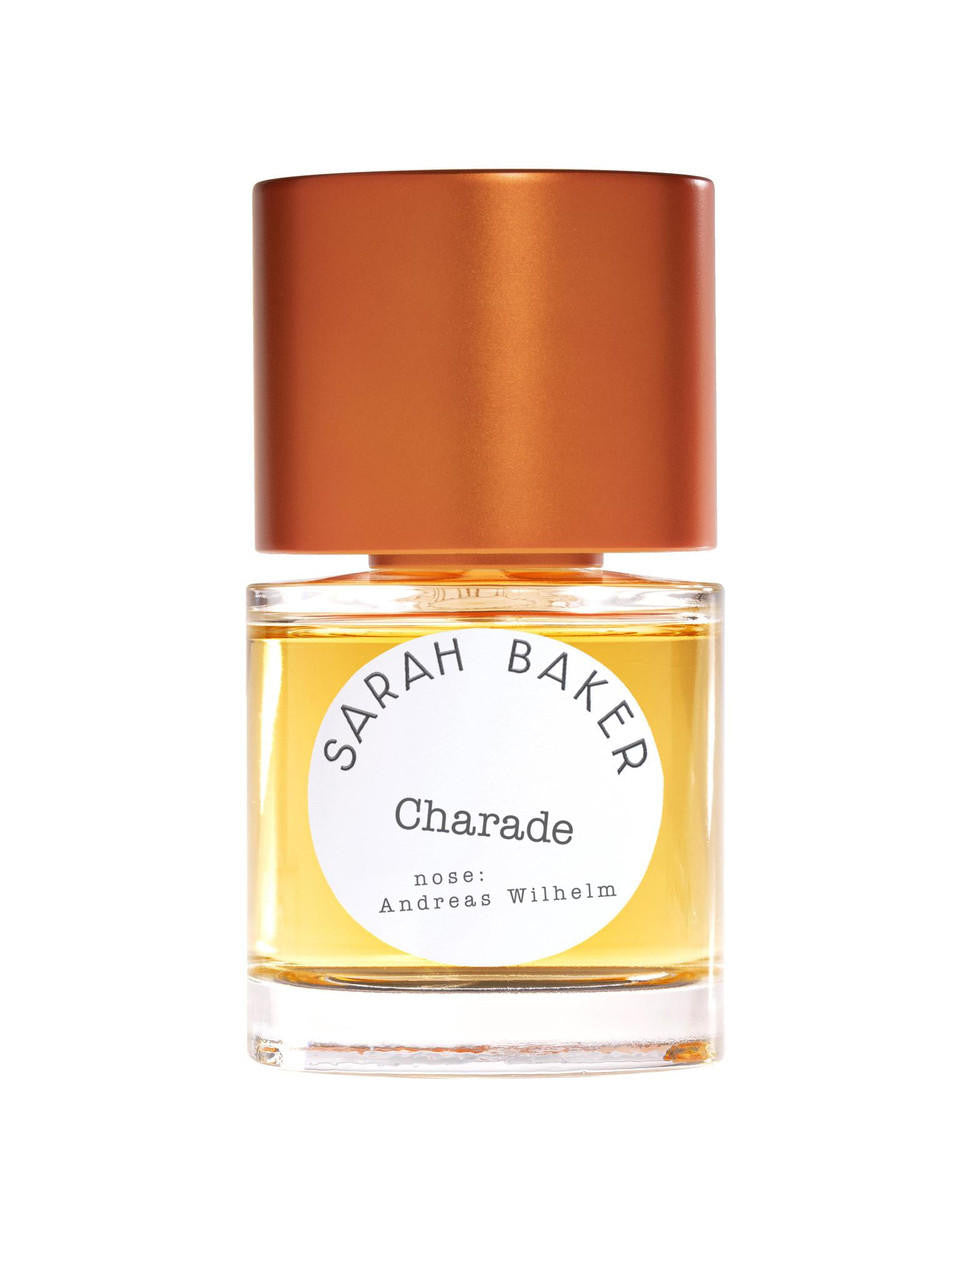  Sarah Baker Charade Extrait de Parfum 